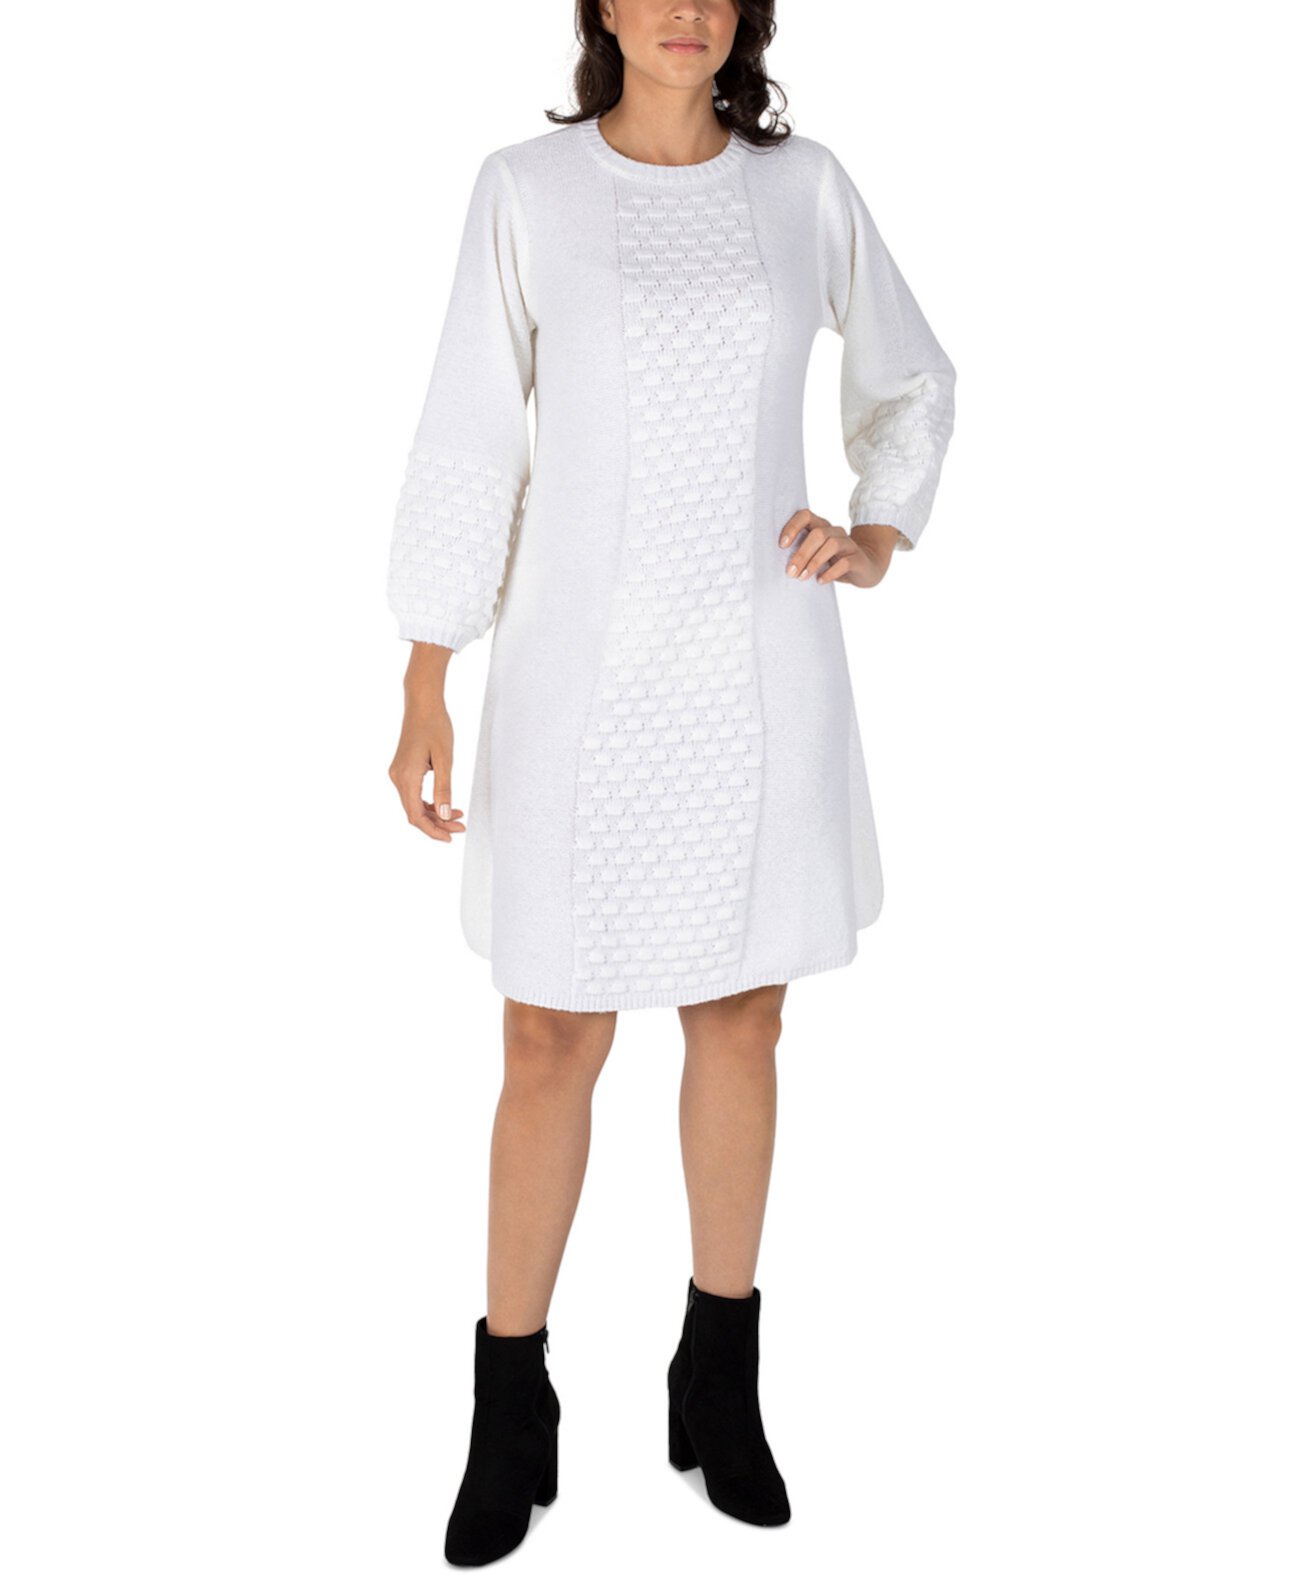 Текстурированное платье-свитер Petite с объемными рукавами Robbie Bee